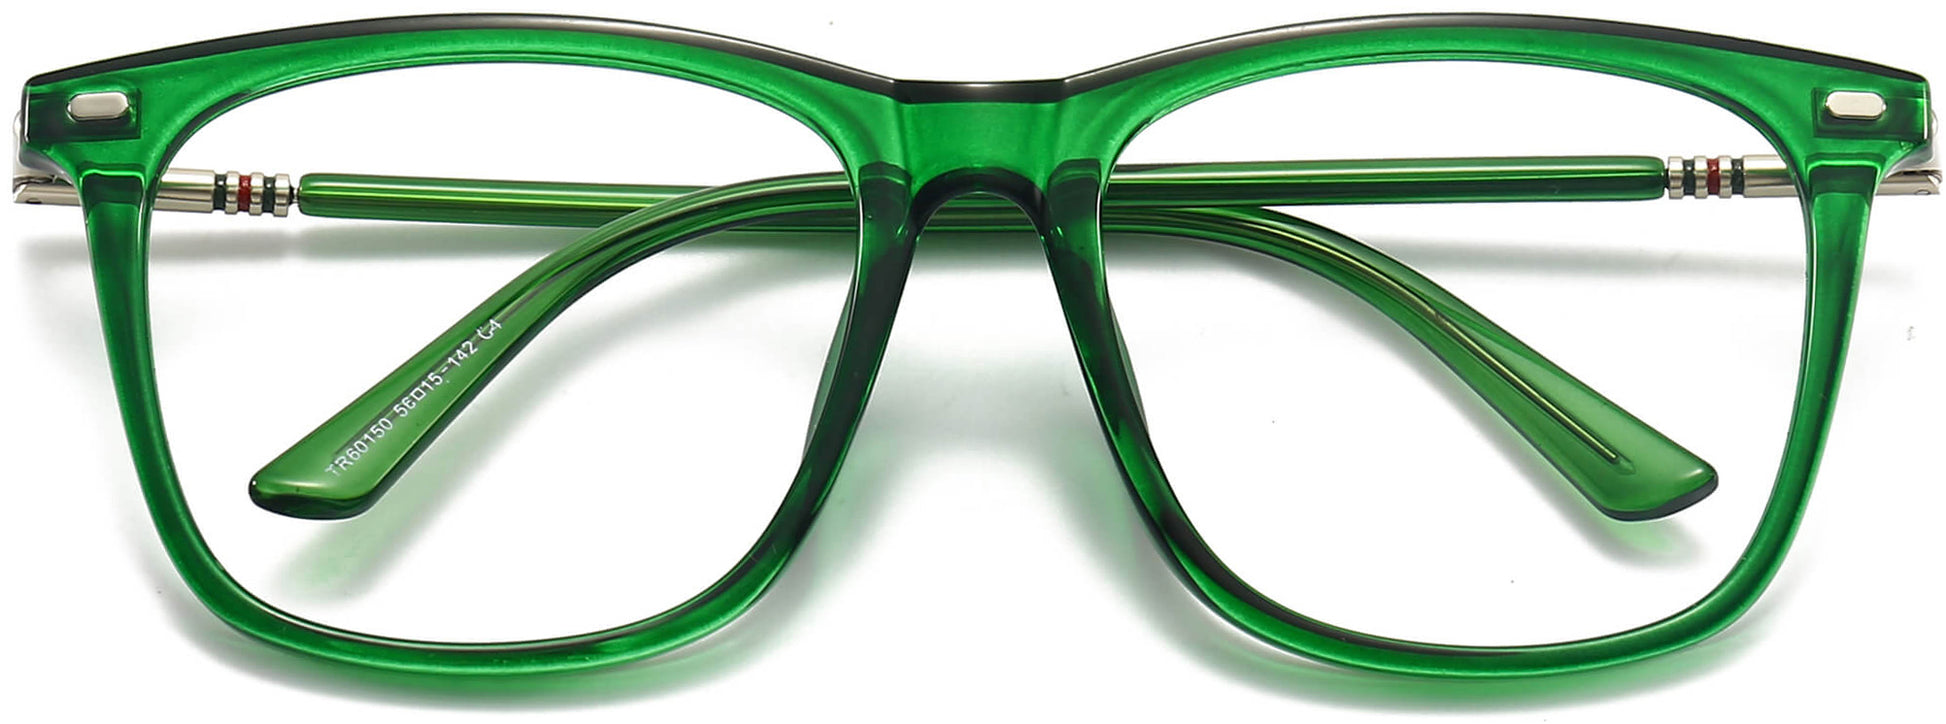 Lennox Square Green Eyeglasses from ANRRI